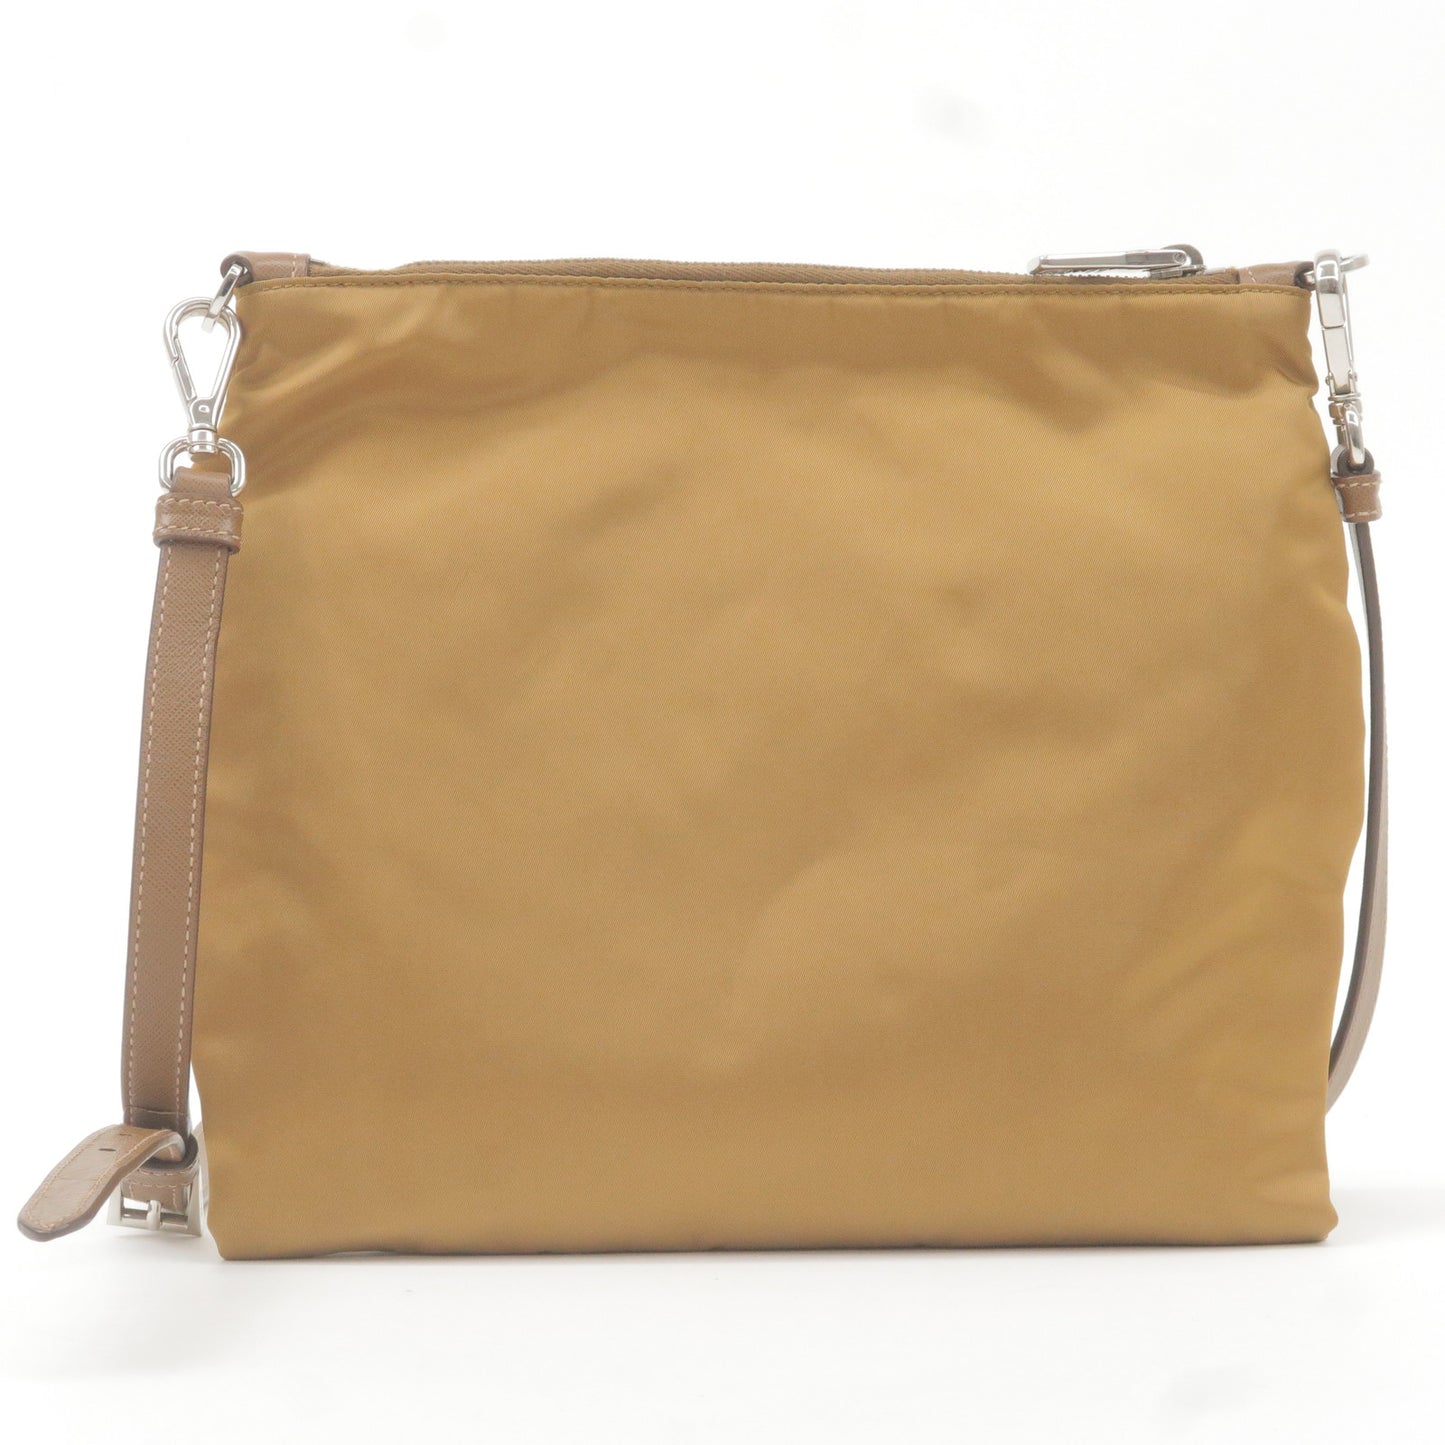 PRADA Logo Nylon Leather Shoulder Bag Crossbody Bag Brown